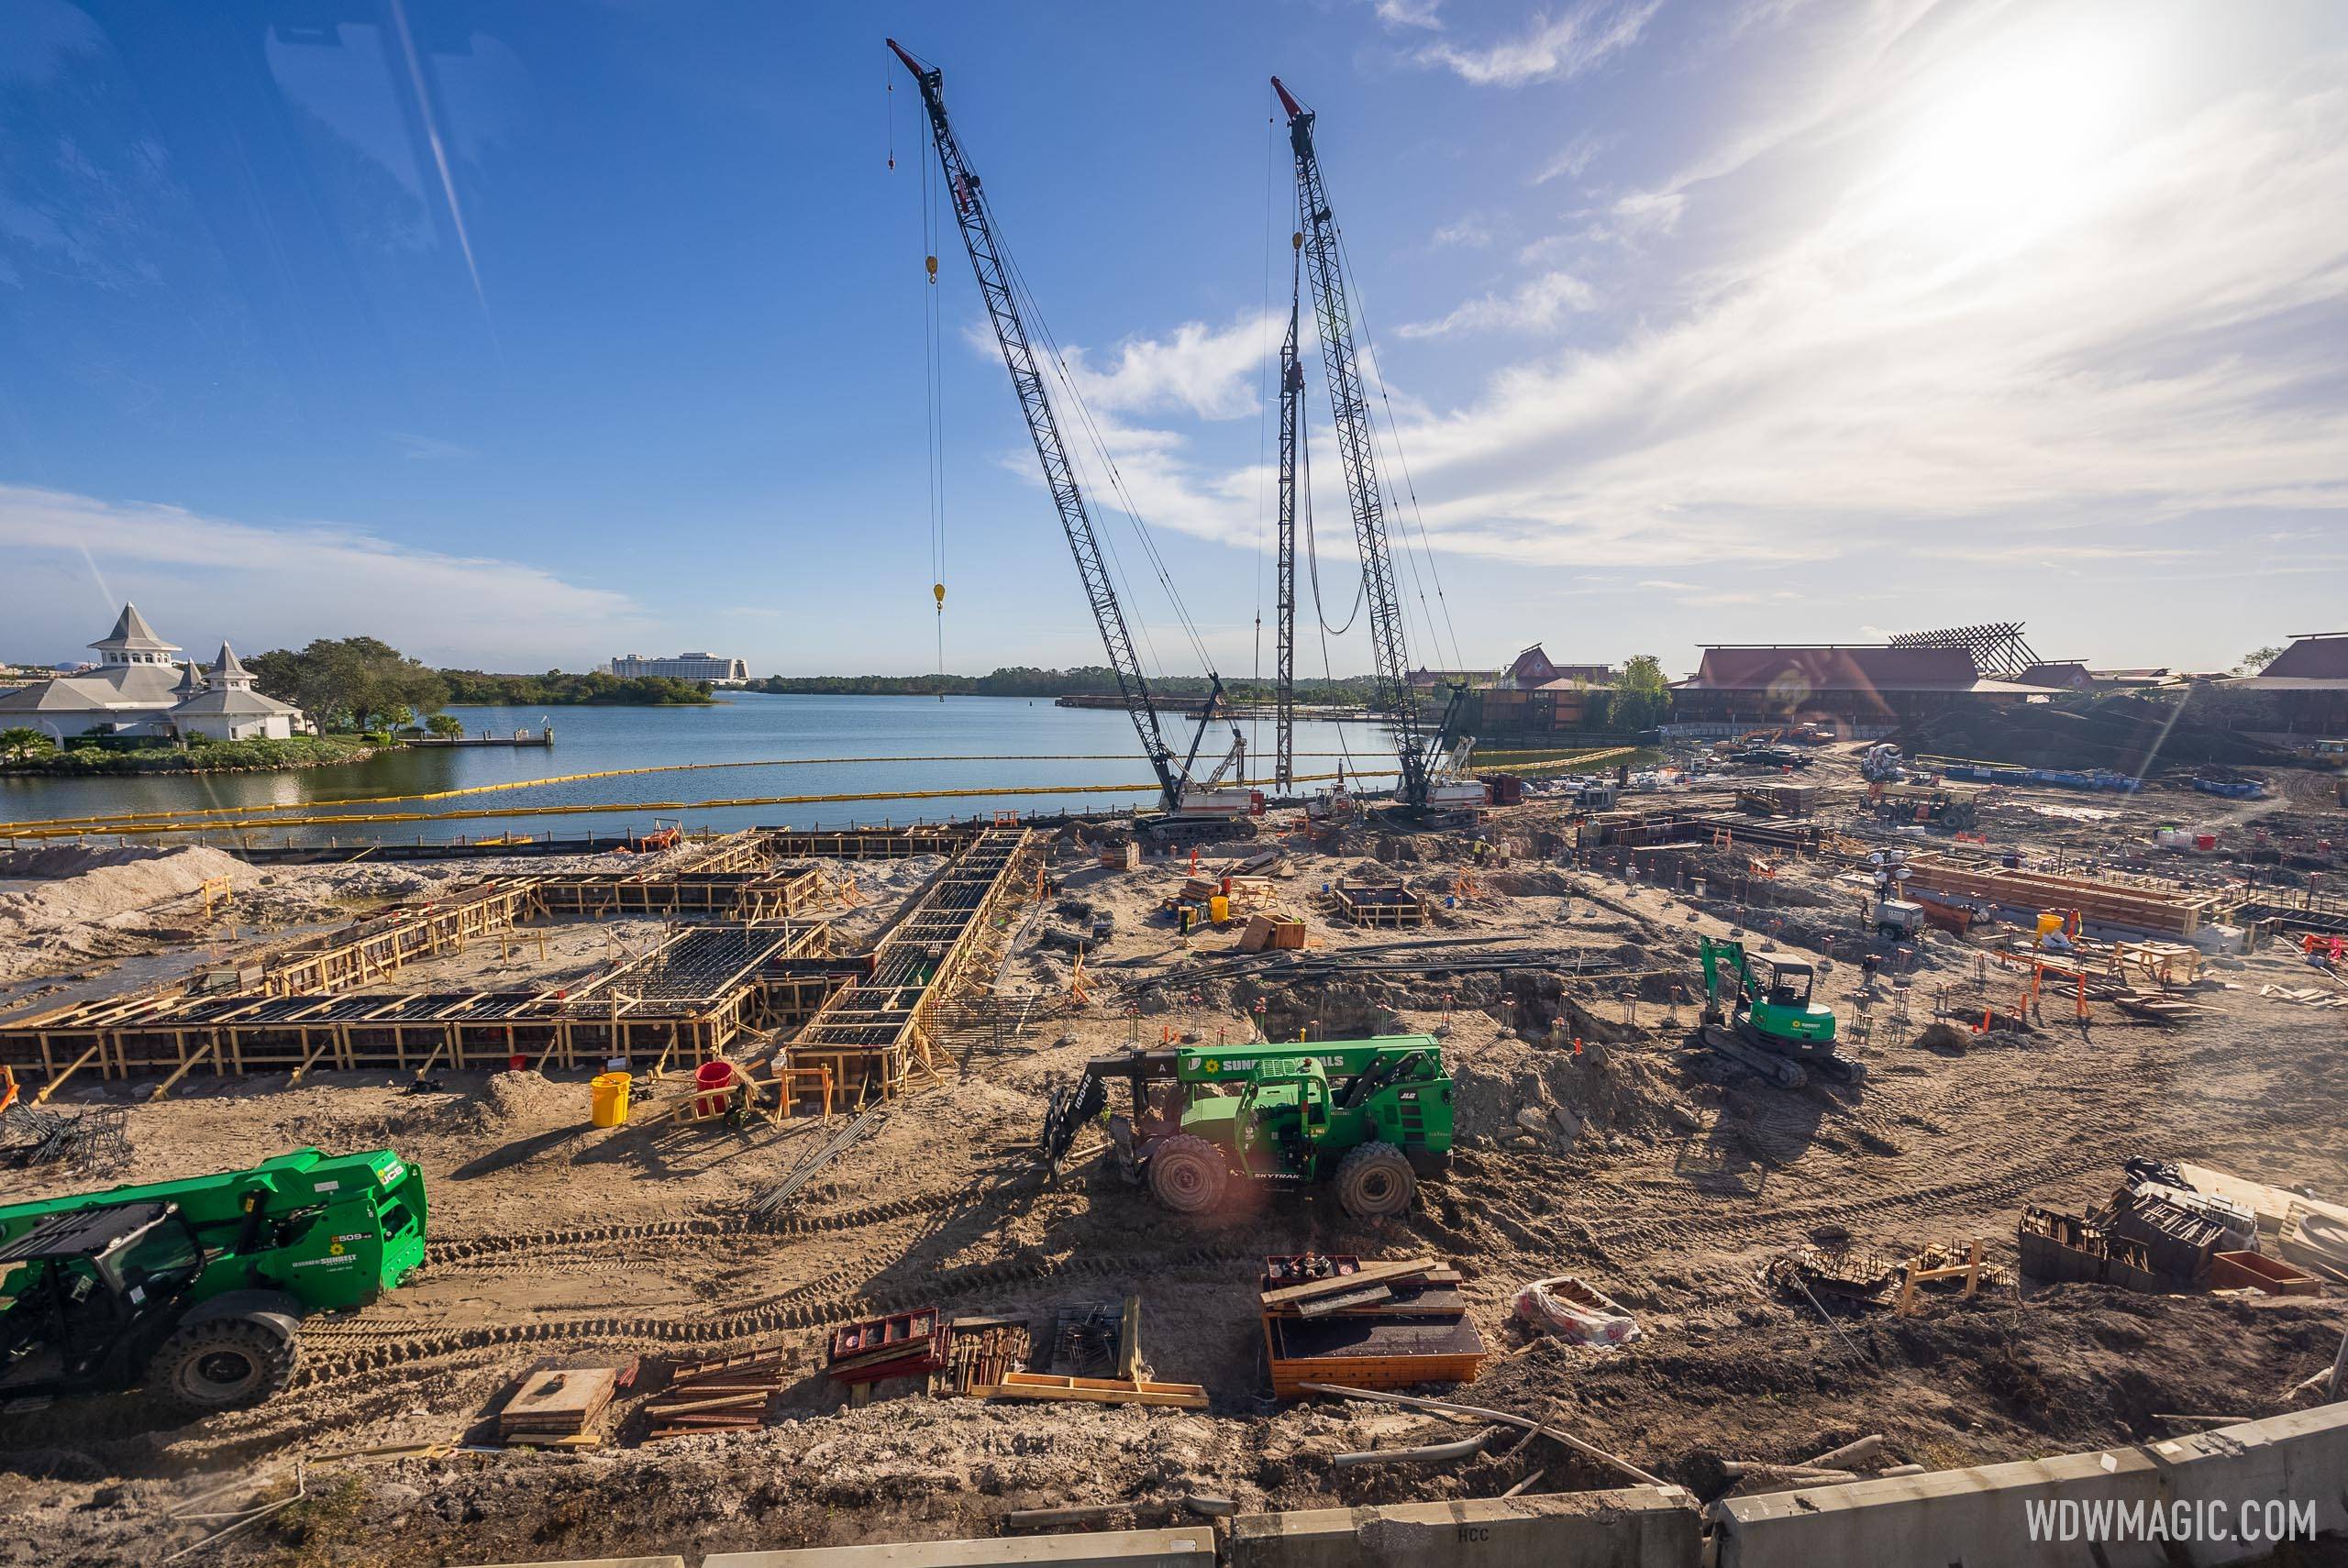 Disney Vacation Club Tower construction shows considerable progress as foundations take shape at Disney's Polynesian Village Resort